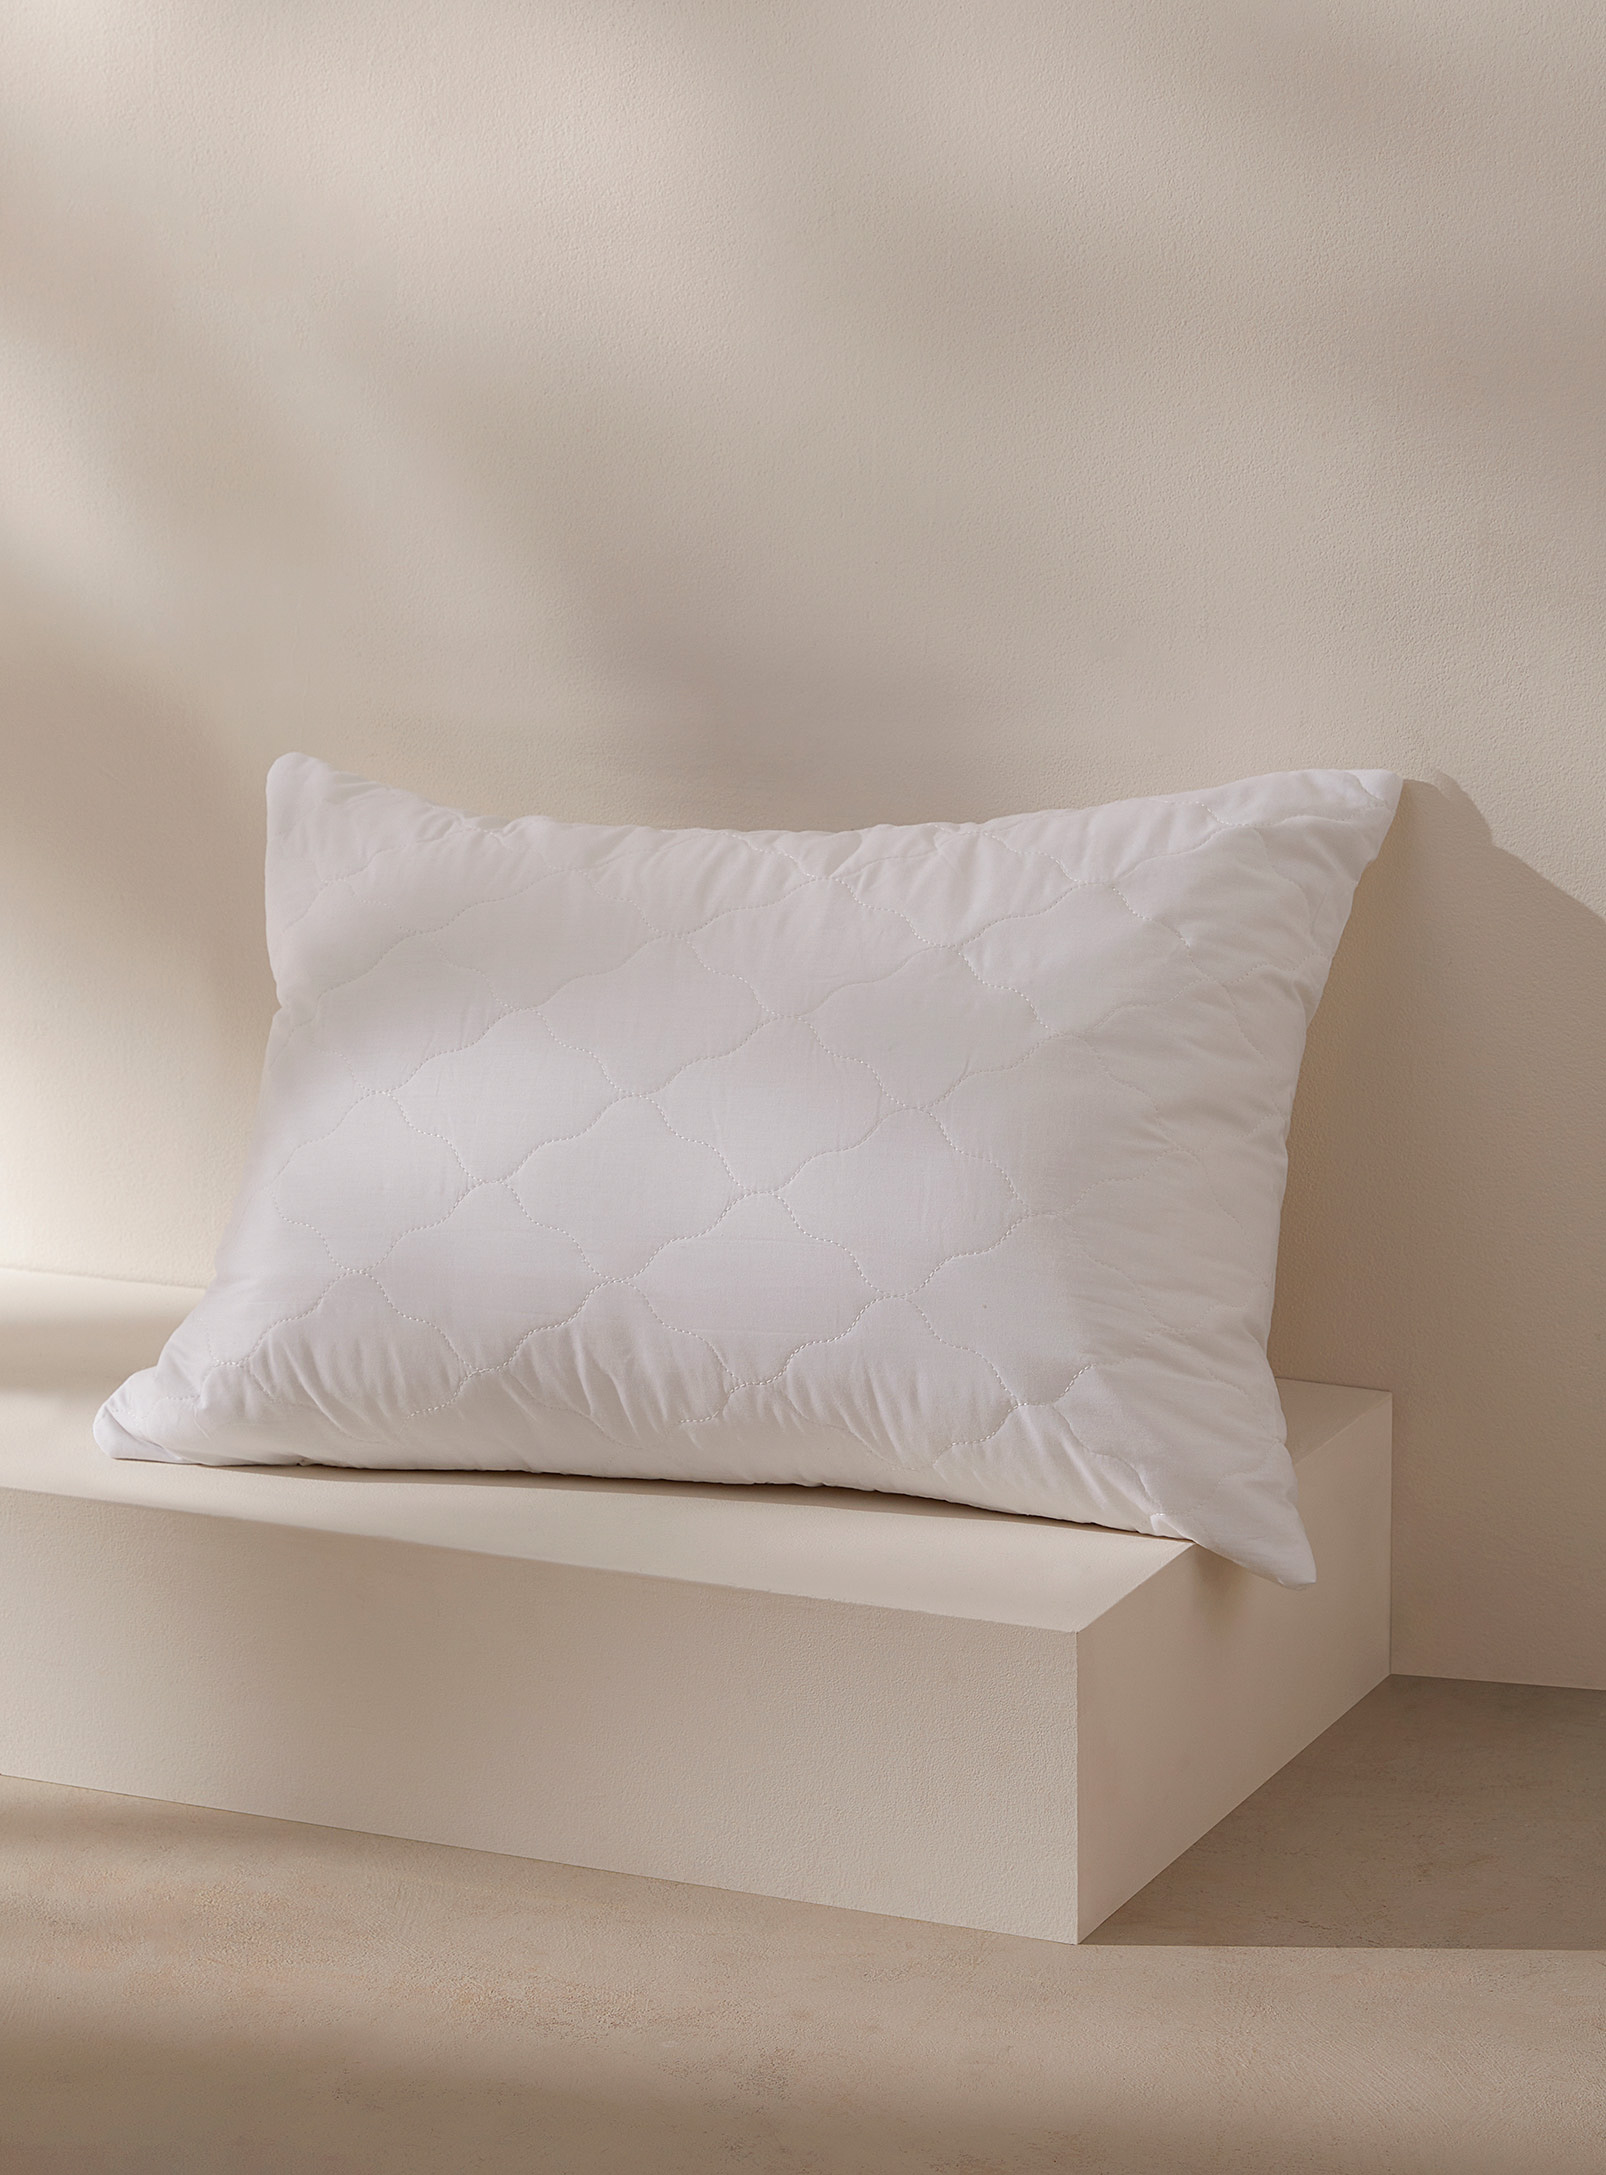 Simons Maison - Duvetine pillow protector